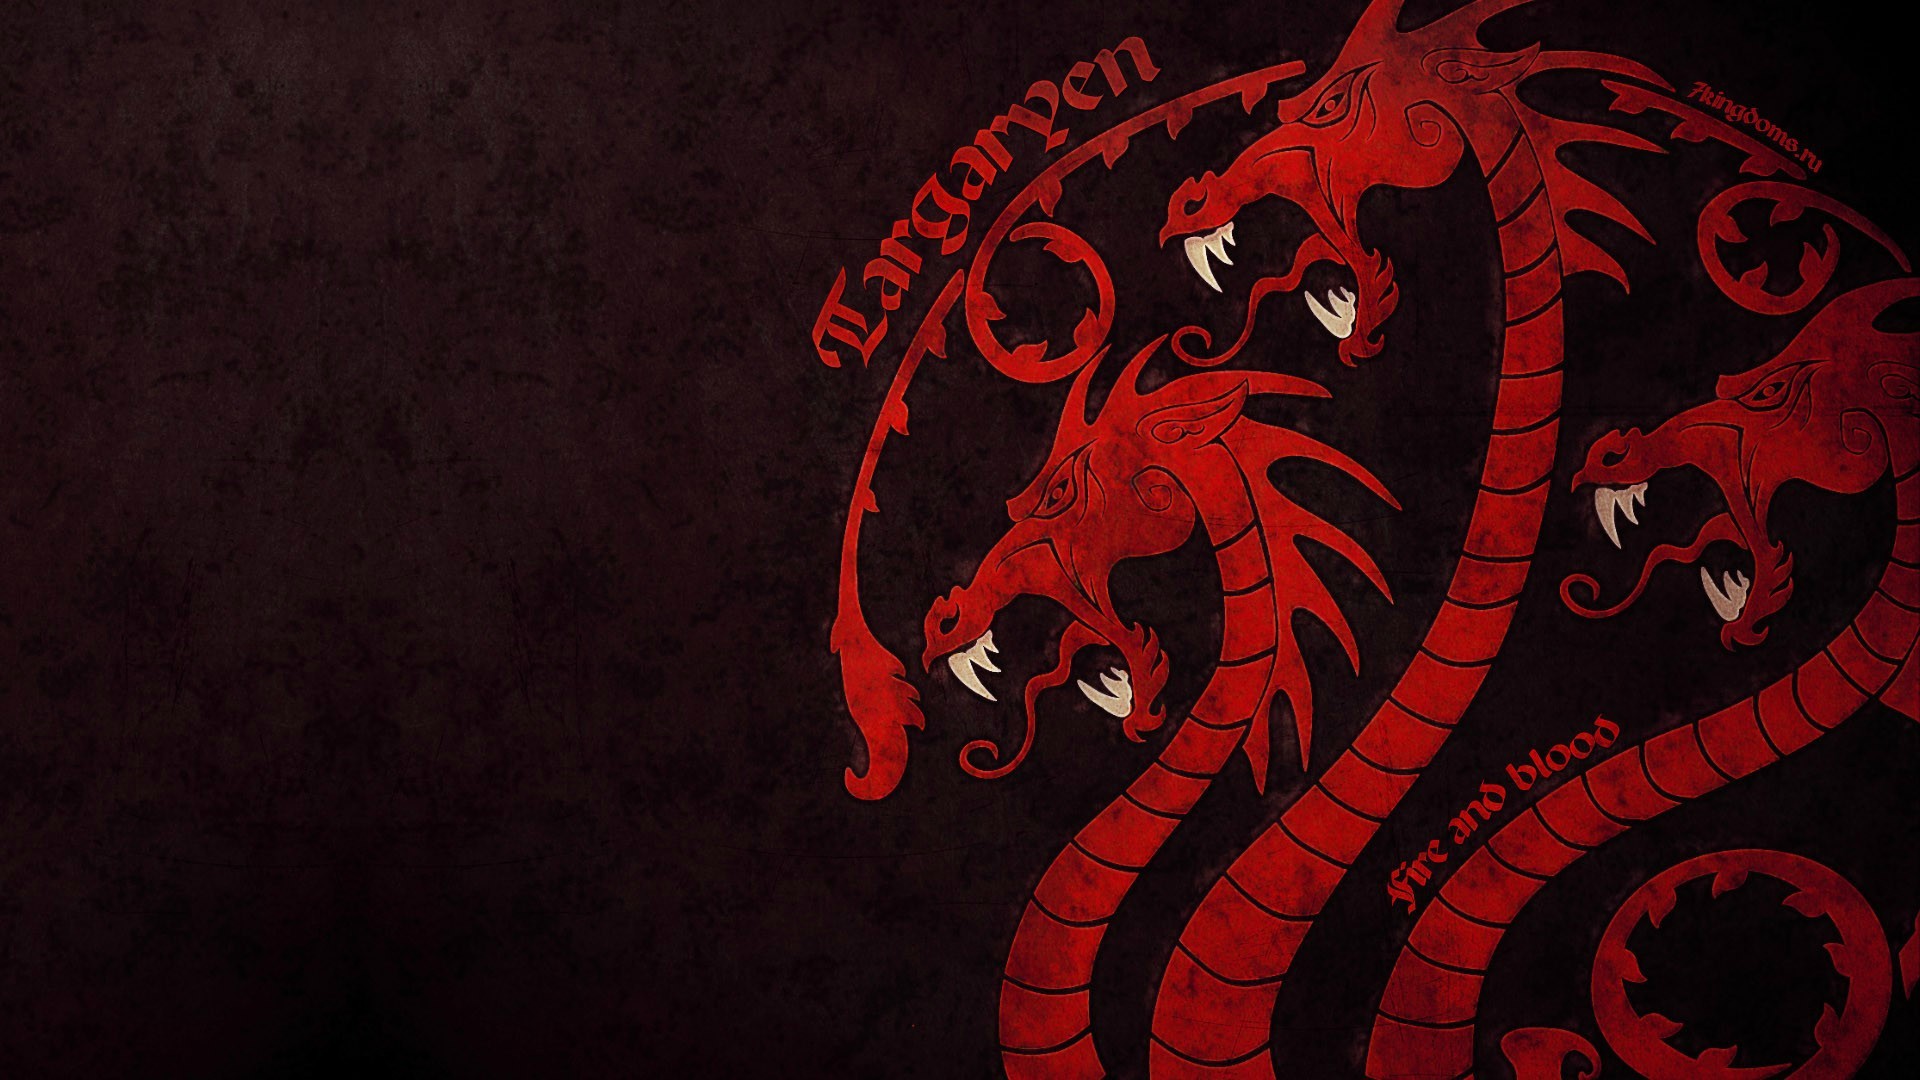 1920x1080 Game Of Thrones House Targaryen Fire And Blood Dragon Sigils Wallpaper